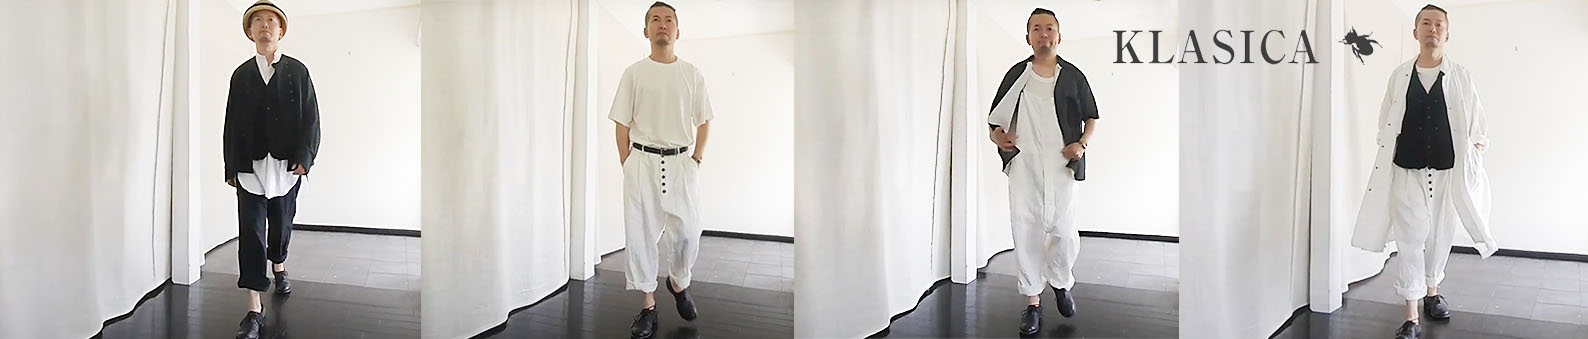 Klasica Japanese clothing